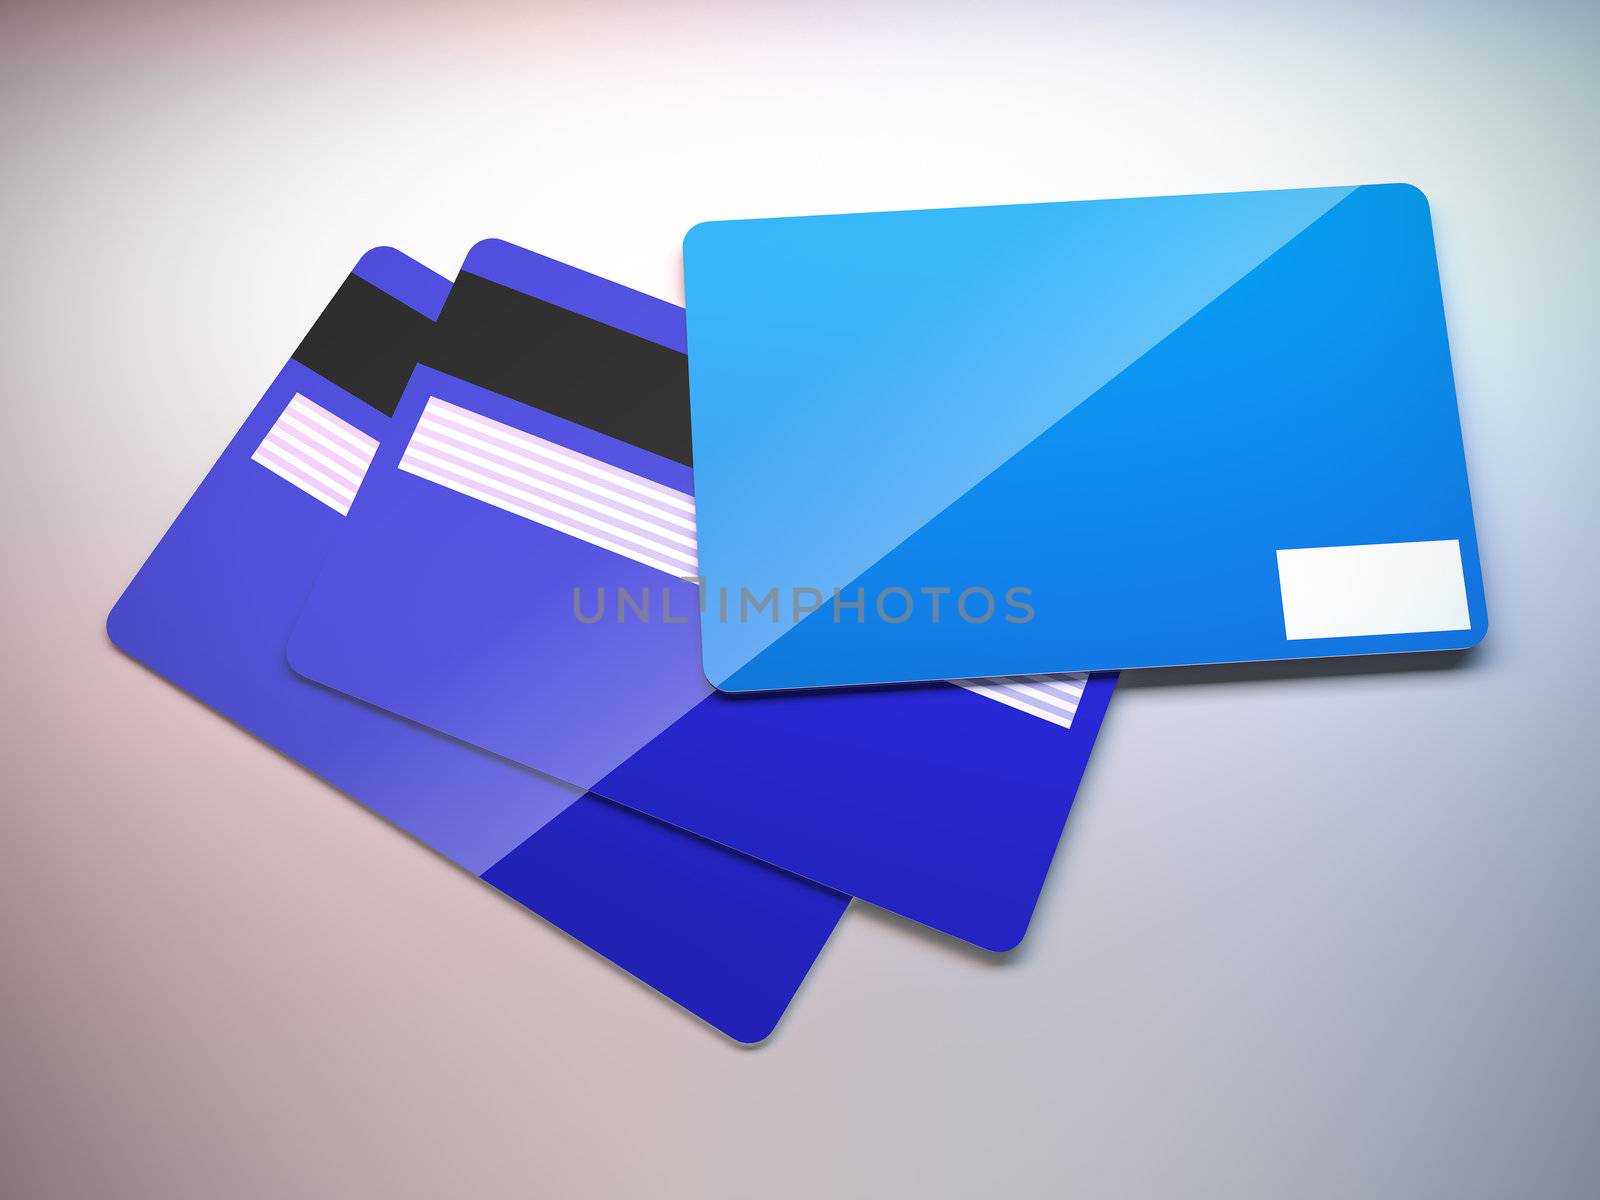 A 3d illustration of plastic credit cards.